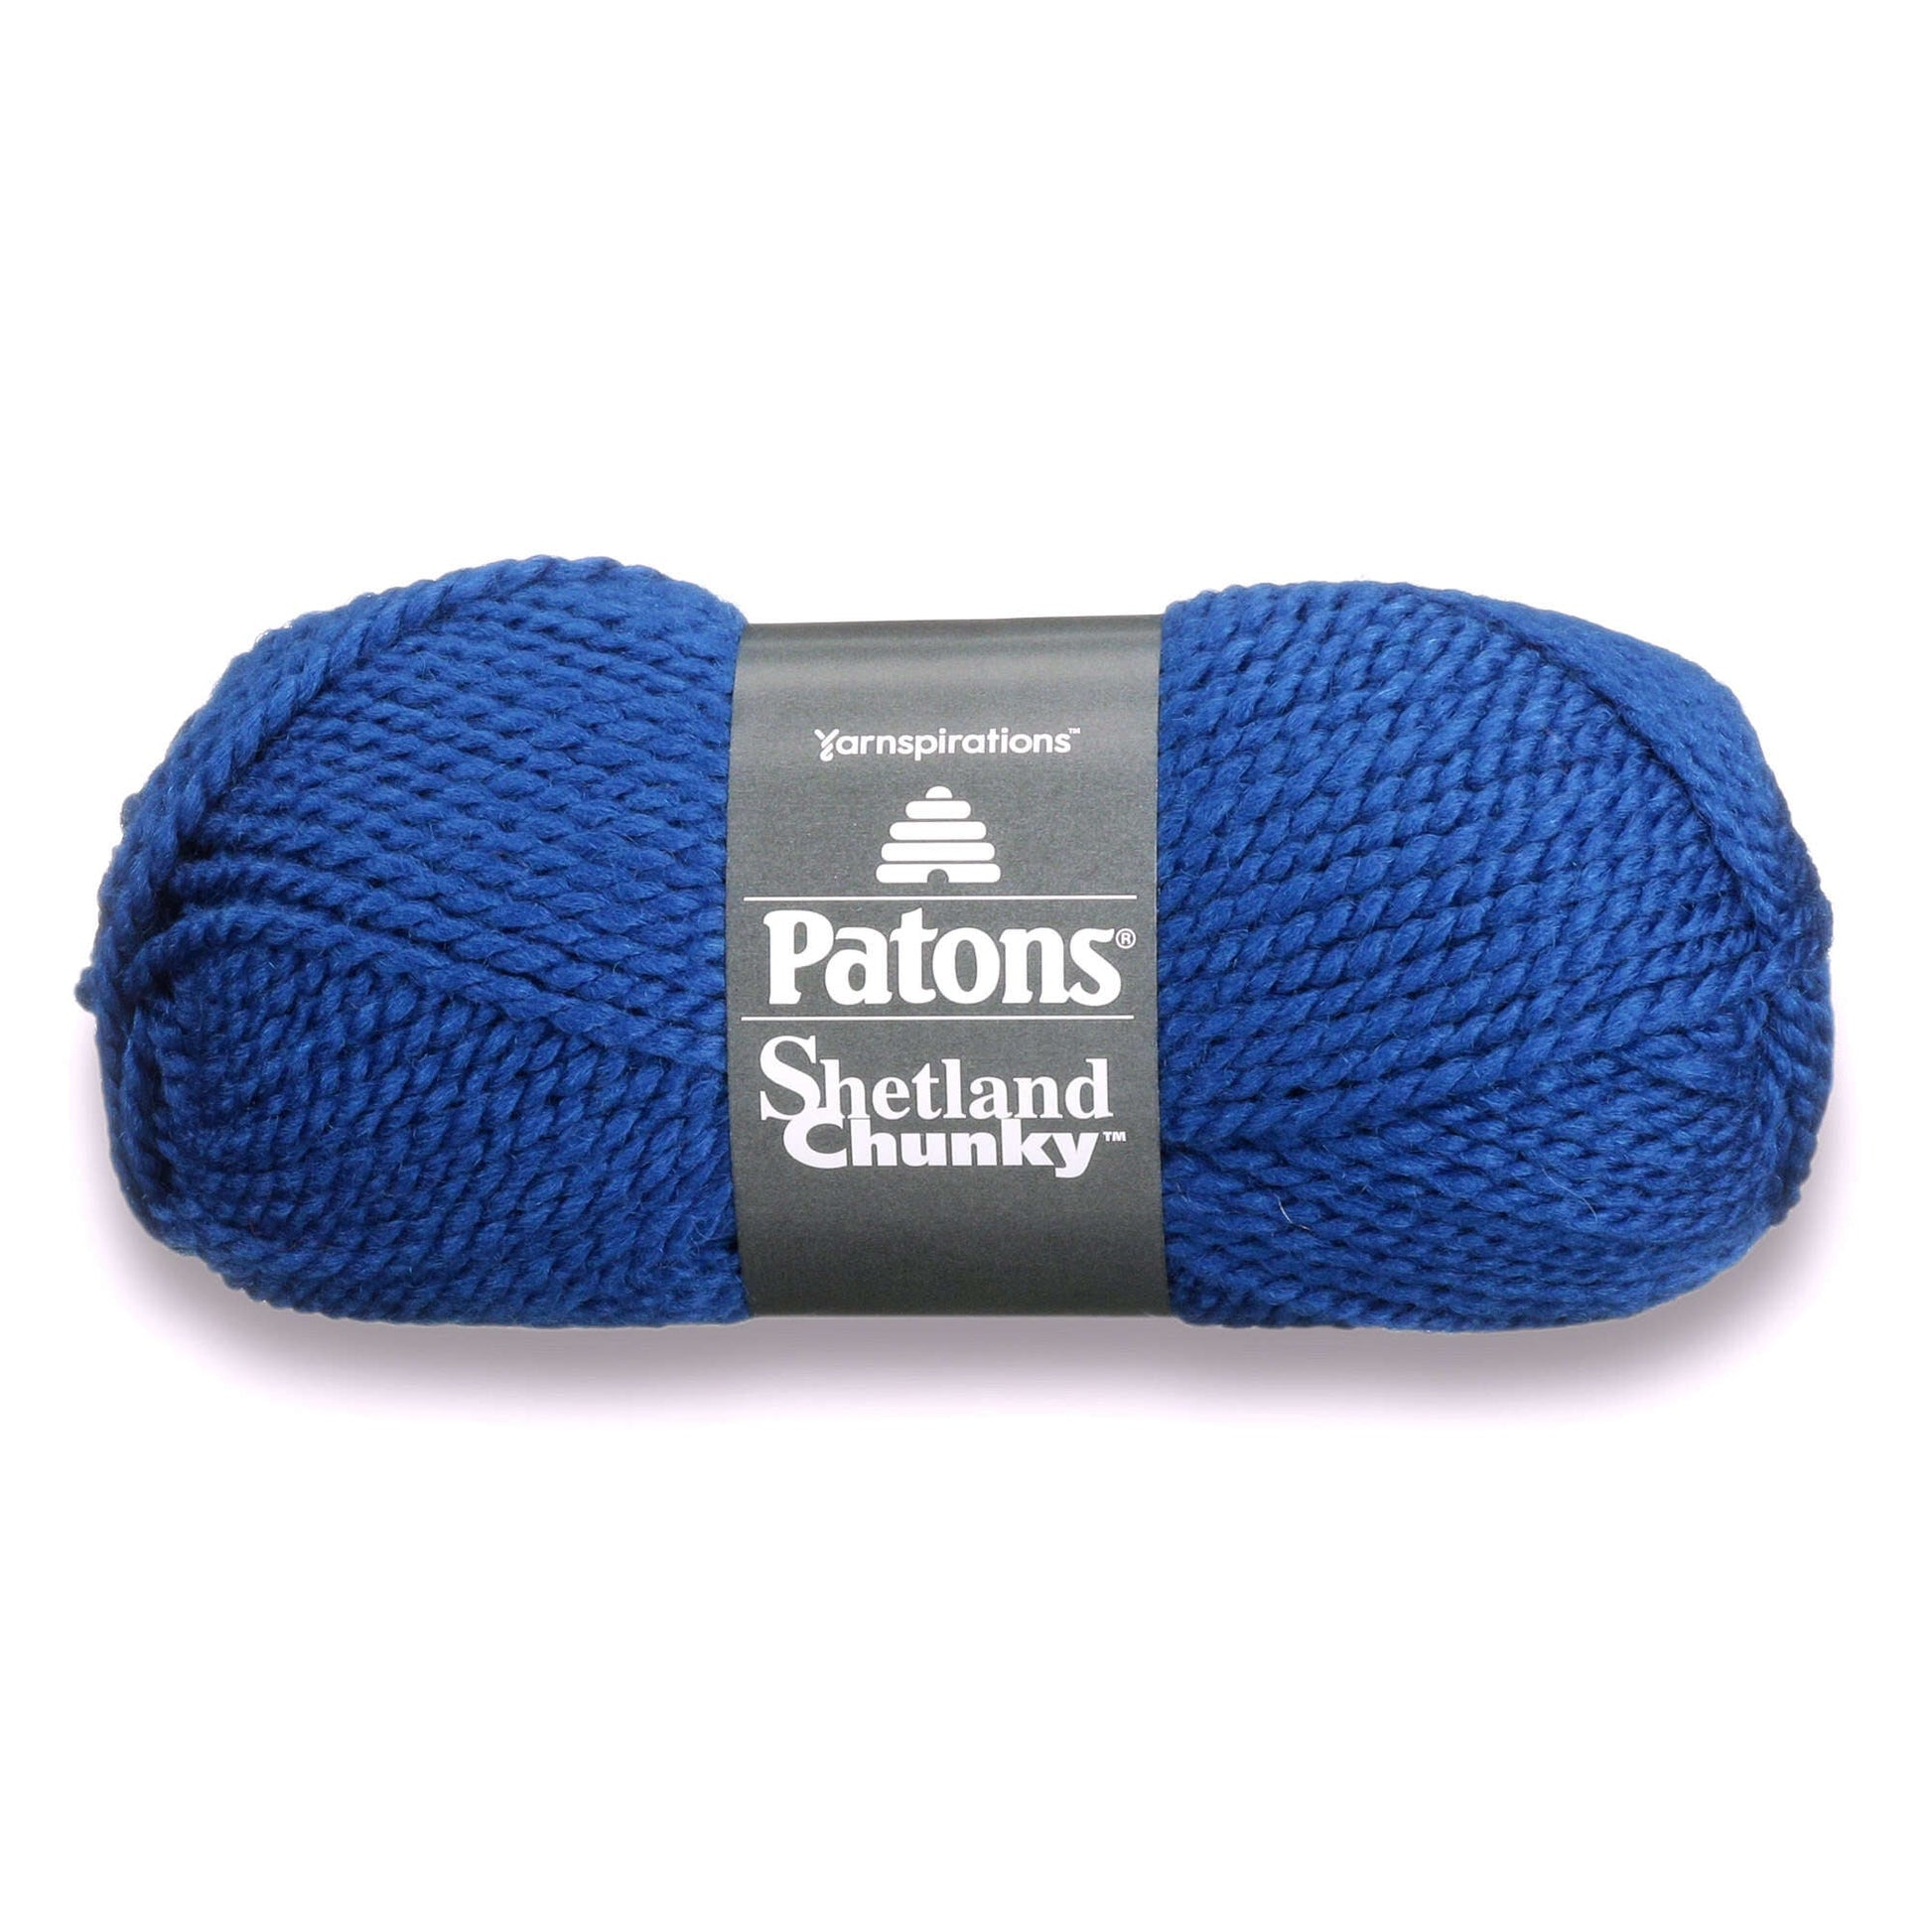 Patons Classic Wool Cherry Yarn - 5 Pack of 3.5oz/100g - Wool - 5 Bulky -  120 Yards - Knitting/Crochet